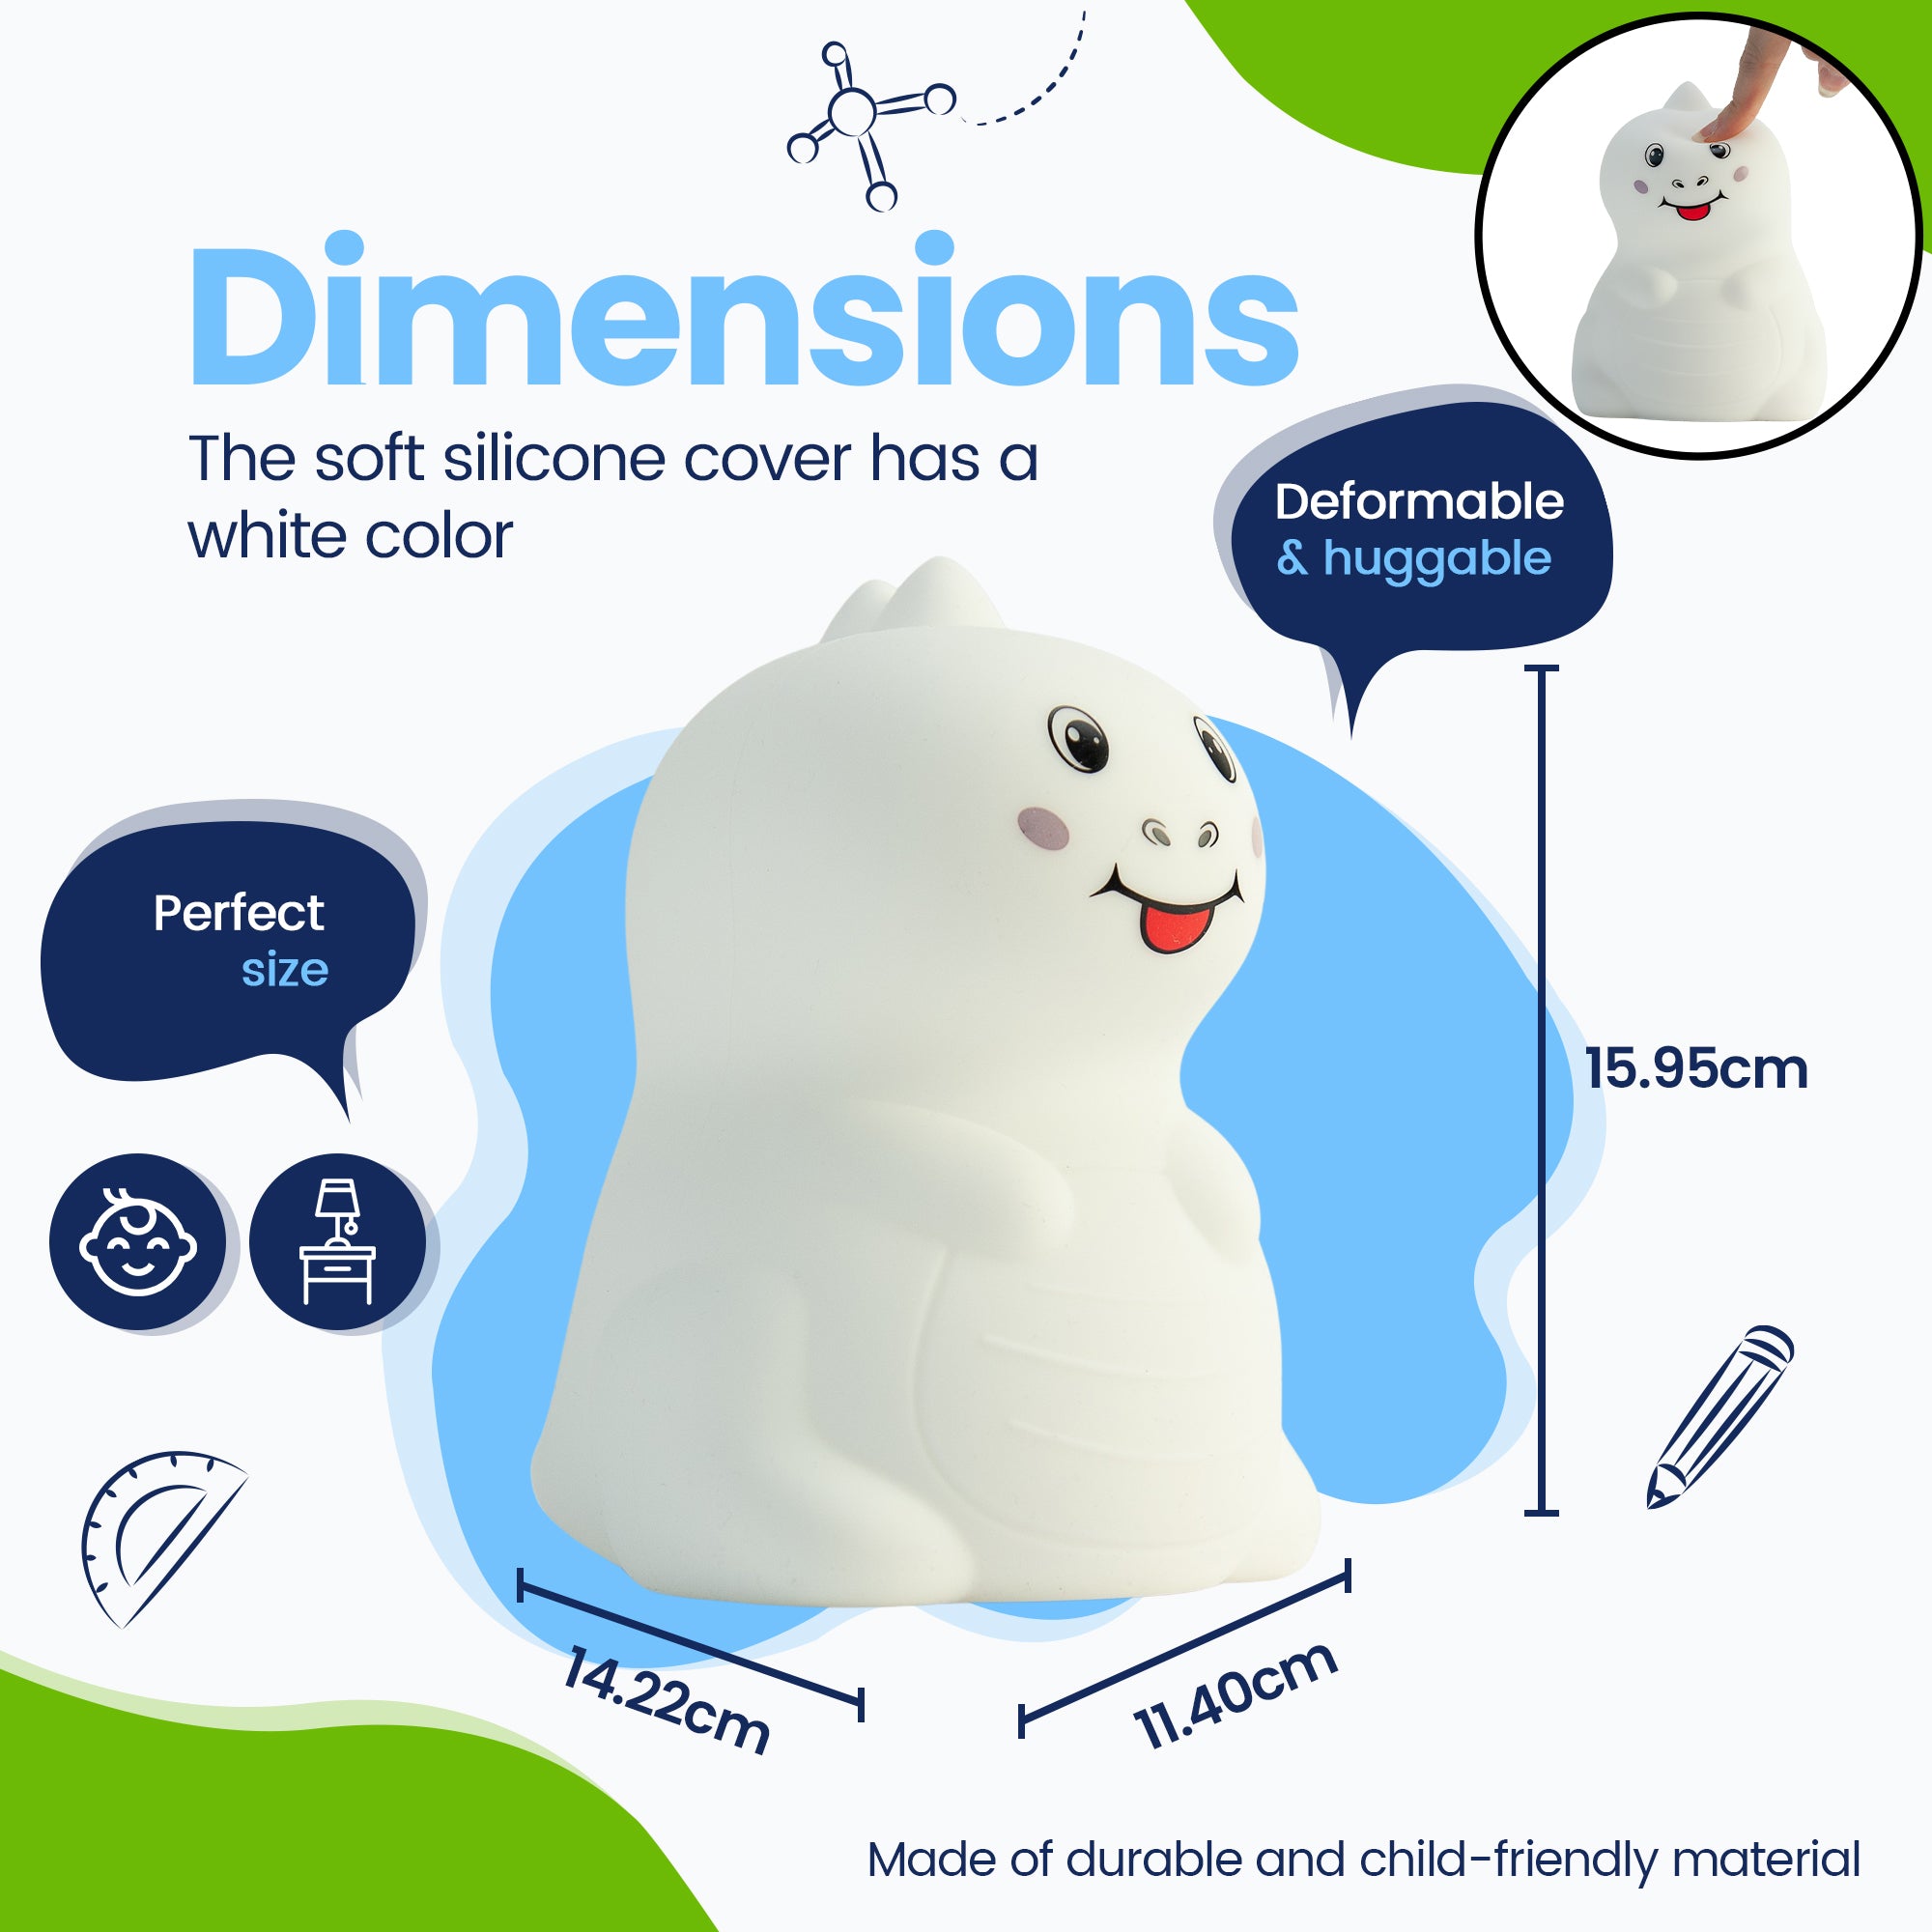 Dimensions Dino Night Lamp - Perfect size - Premium Design - The silicone cover is white in color